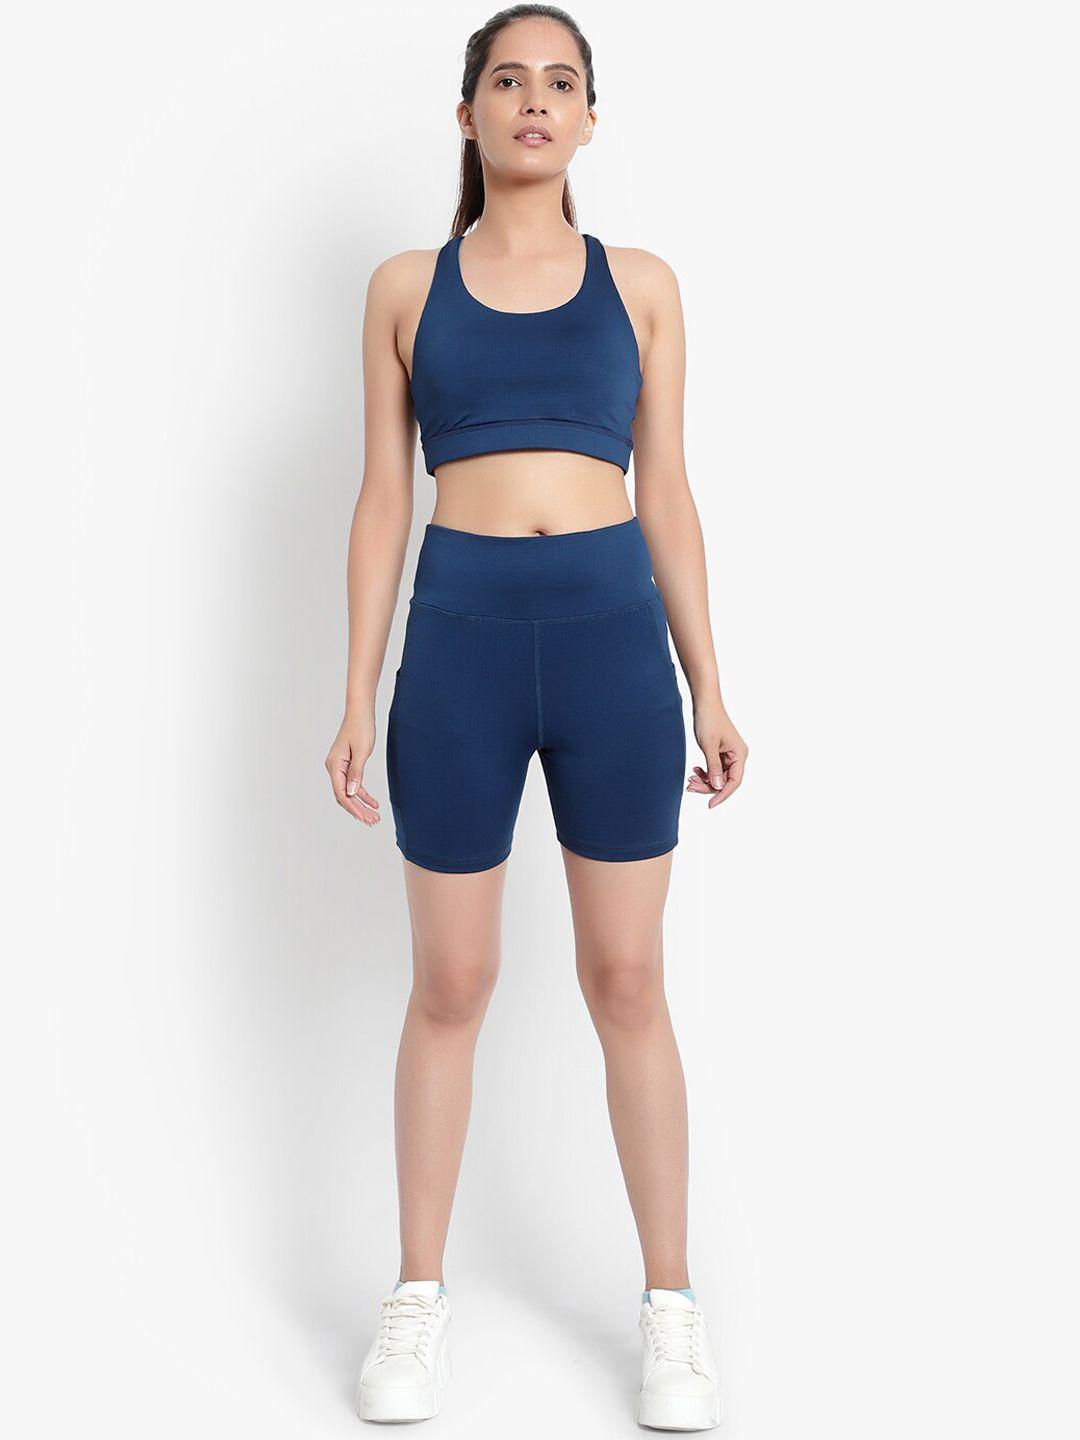 wearjukebox women blue workout bra with shorts